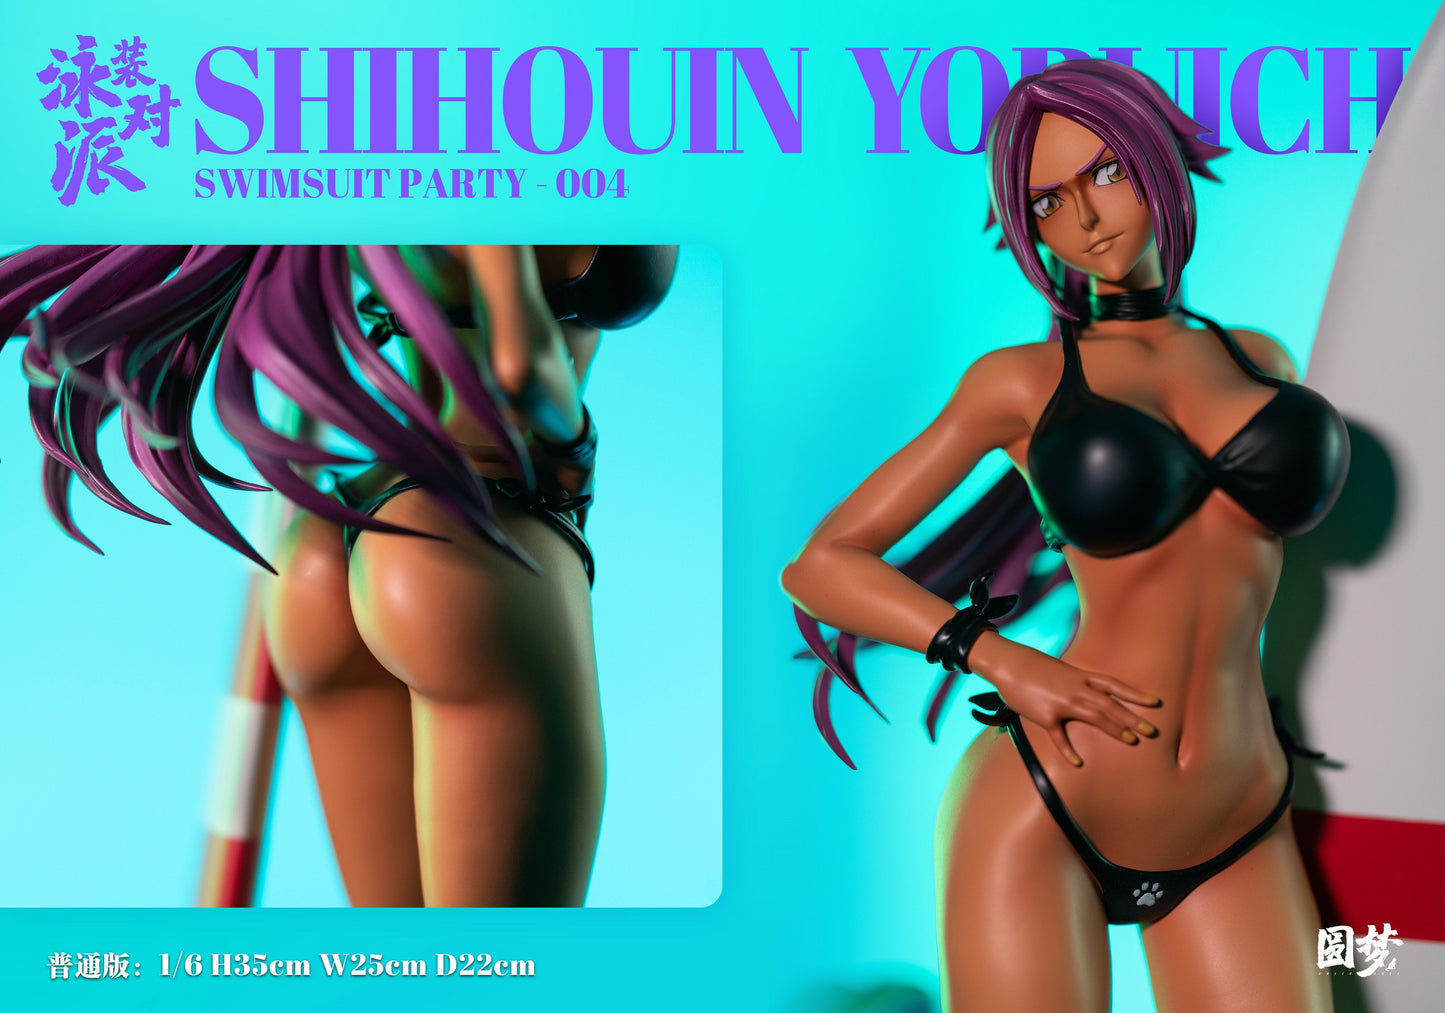 Yuan Meng Studio - Bikini Series Yoruichi [PRE-ORDER CLOSED]